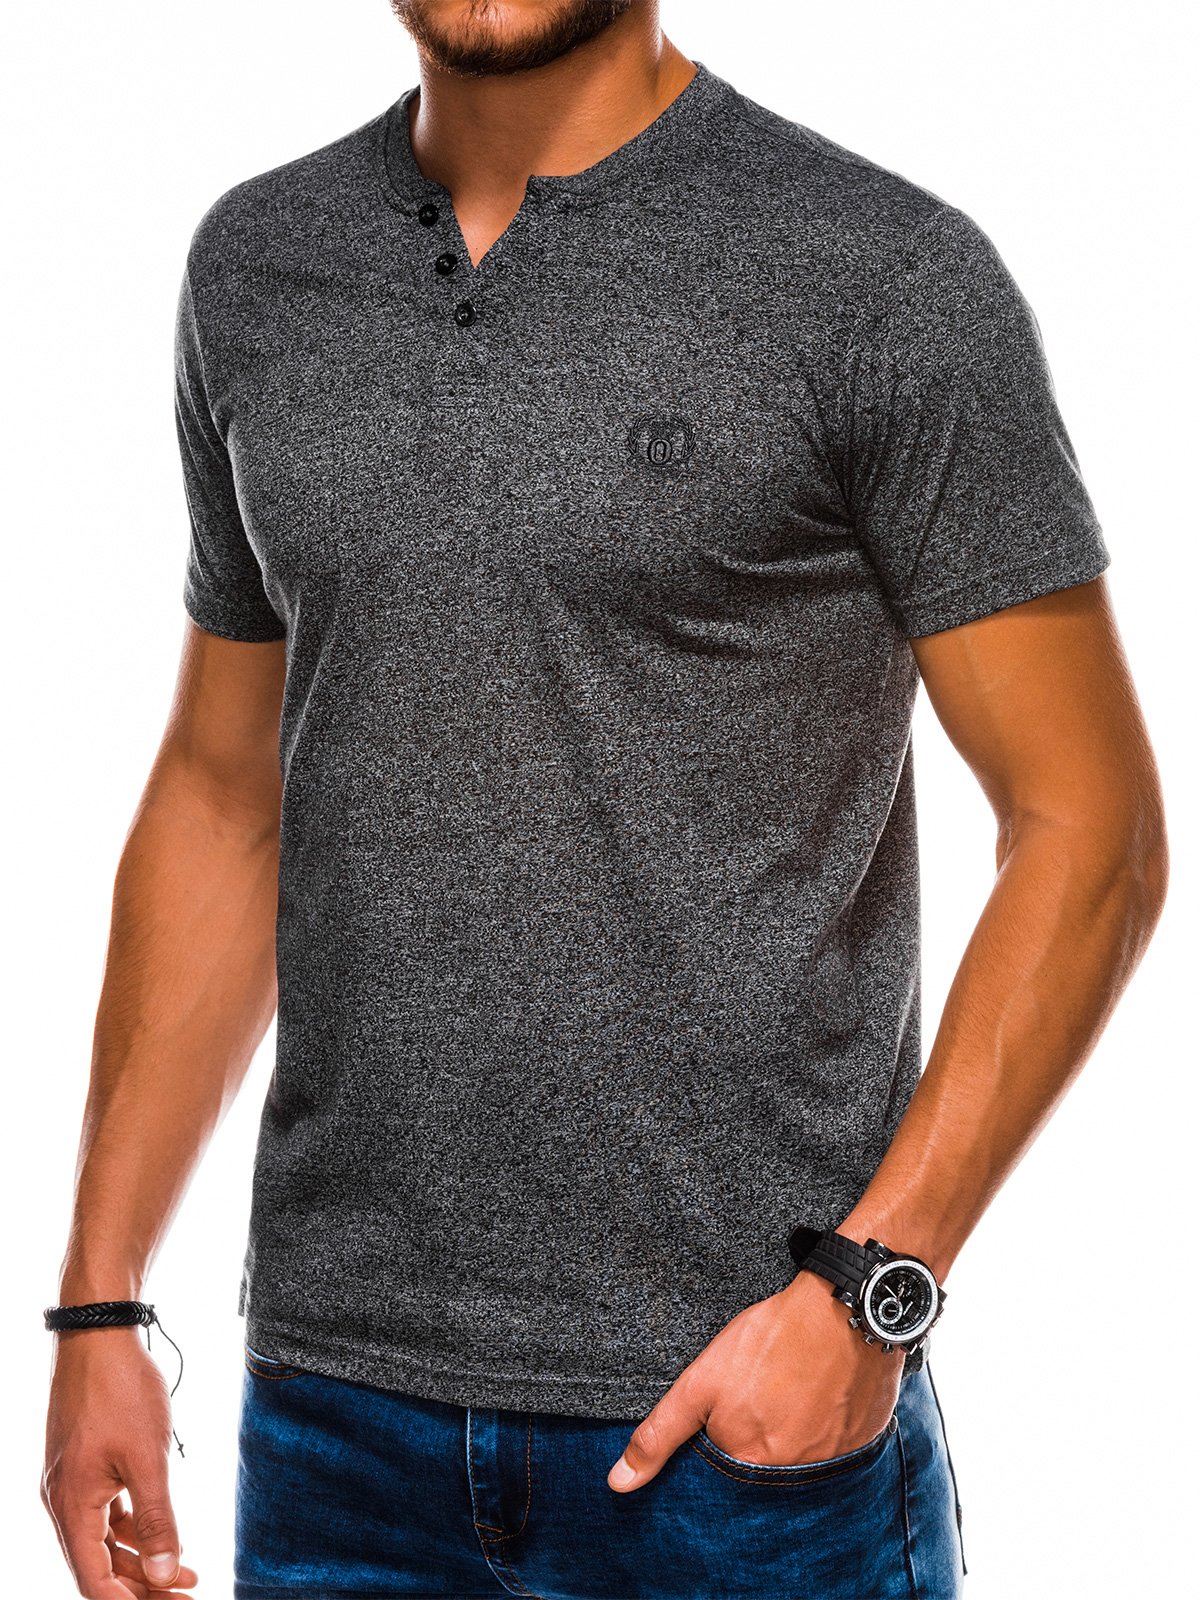 Men's plain t-shirt S1047 - black | MODONE wholesale - Clothing For Men